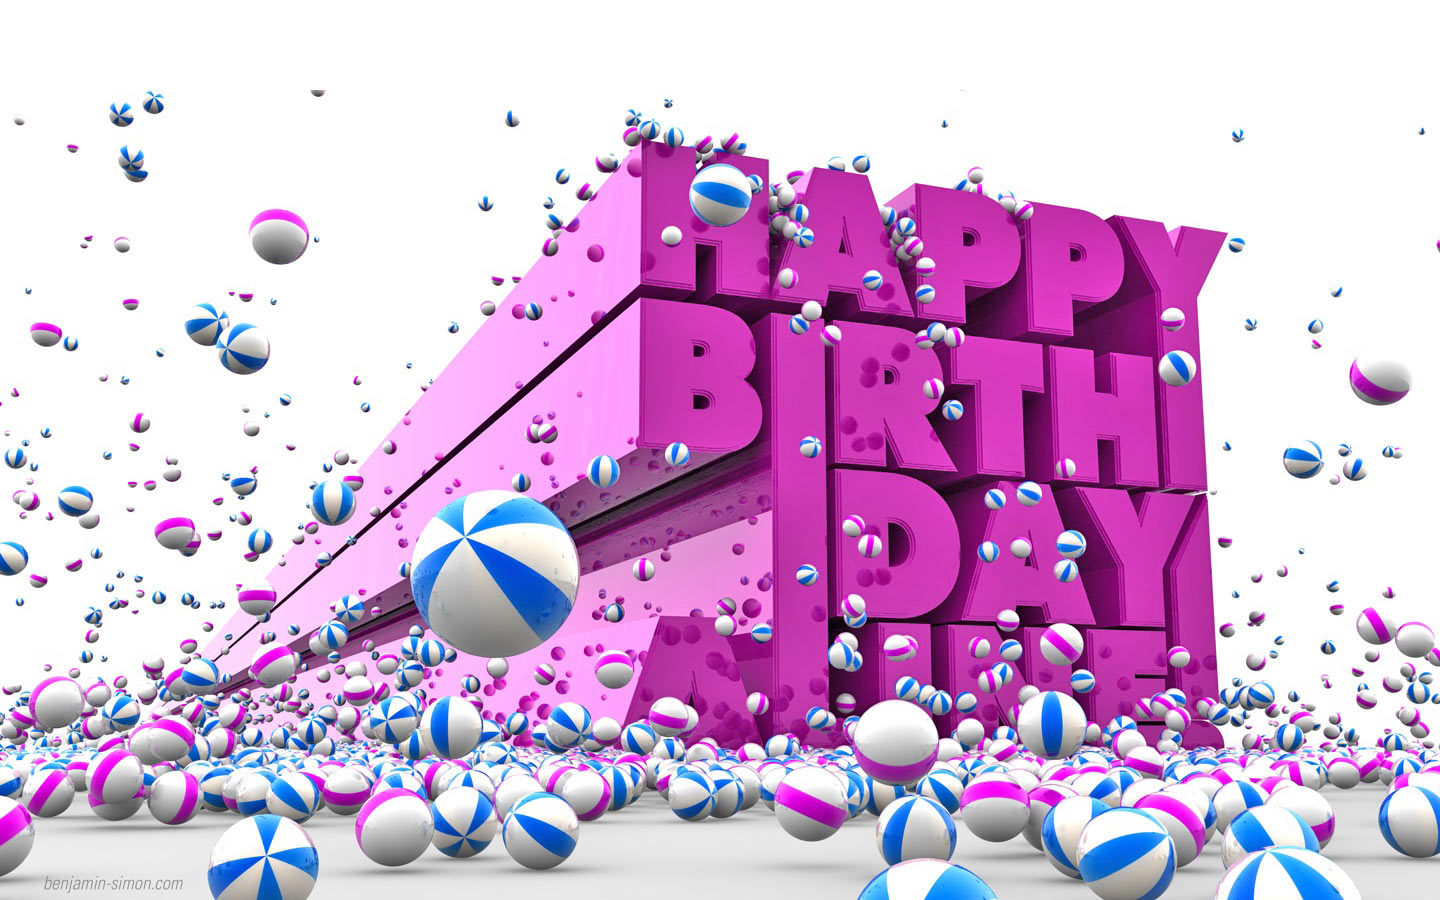 3D Happy Birthday Wallpaper Free Download